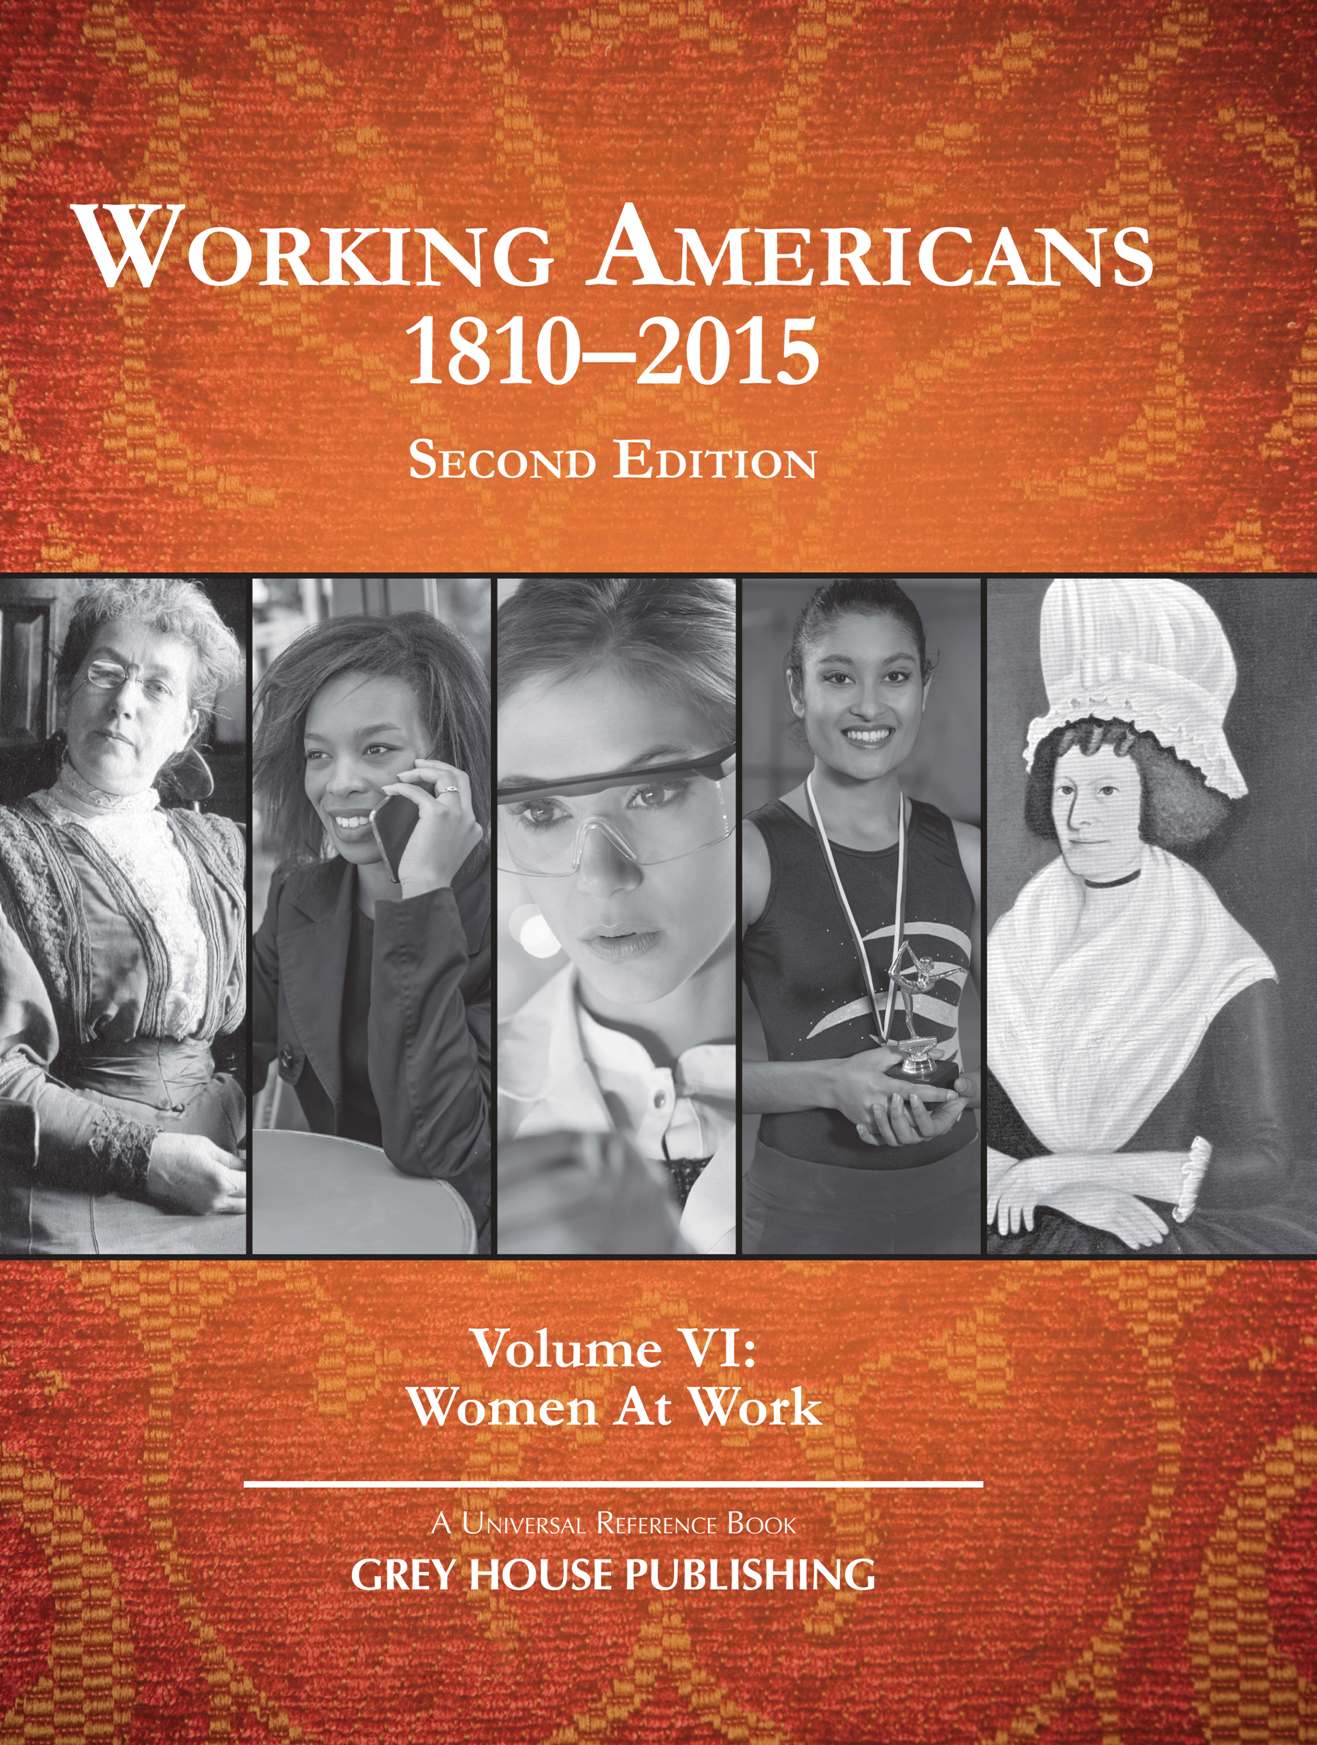 Working Americans 1880-2015 Volume VI: Women At Work